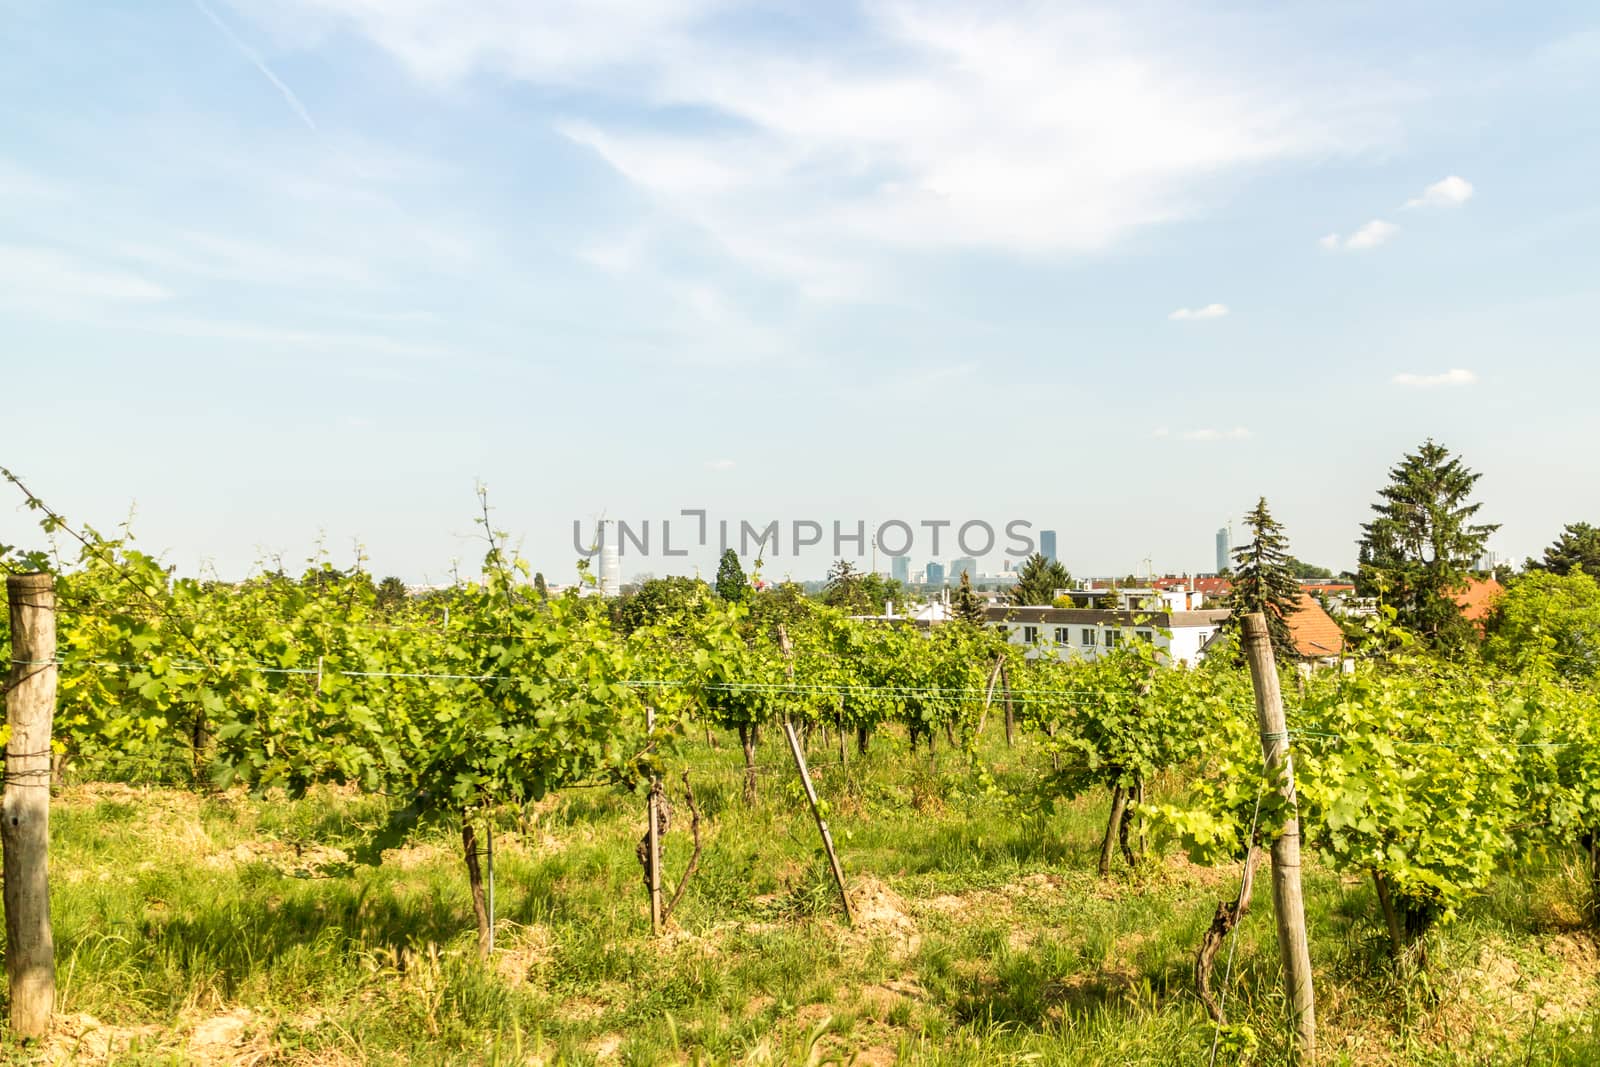 Vineyards of Vienna by MysteryShot